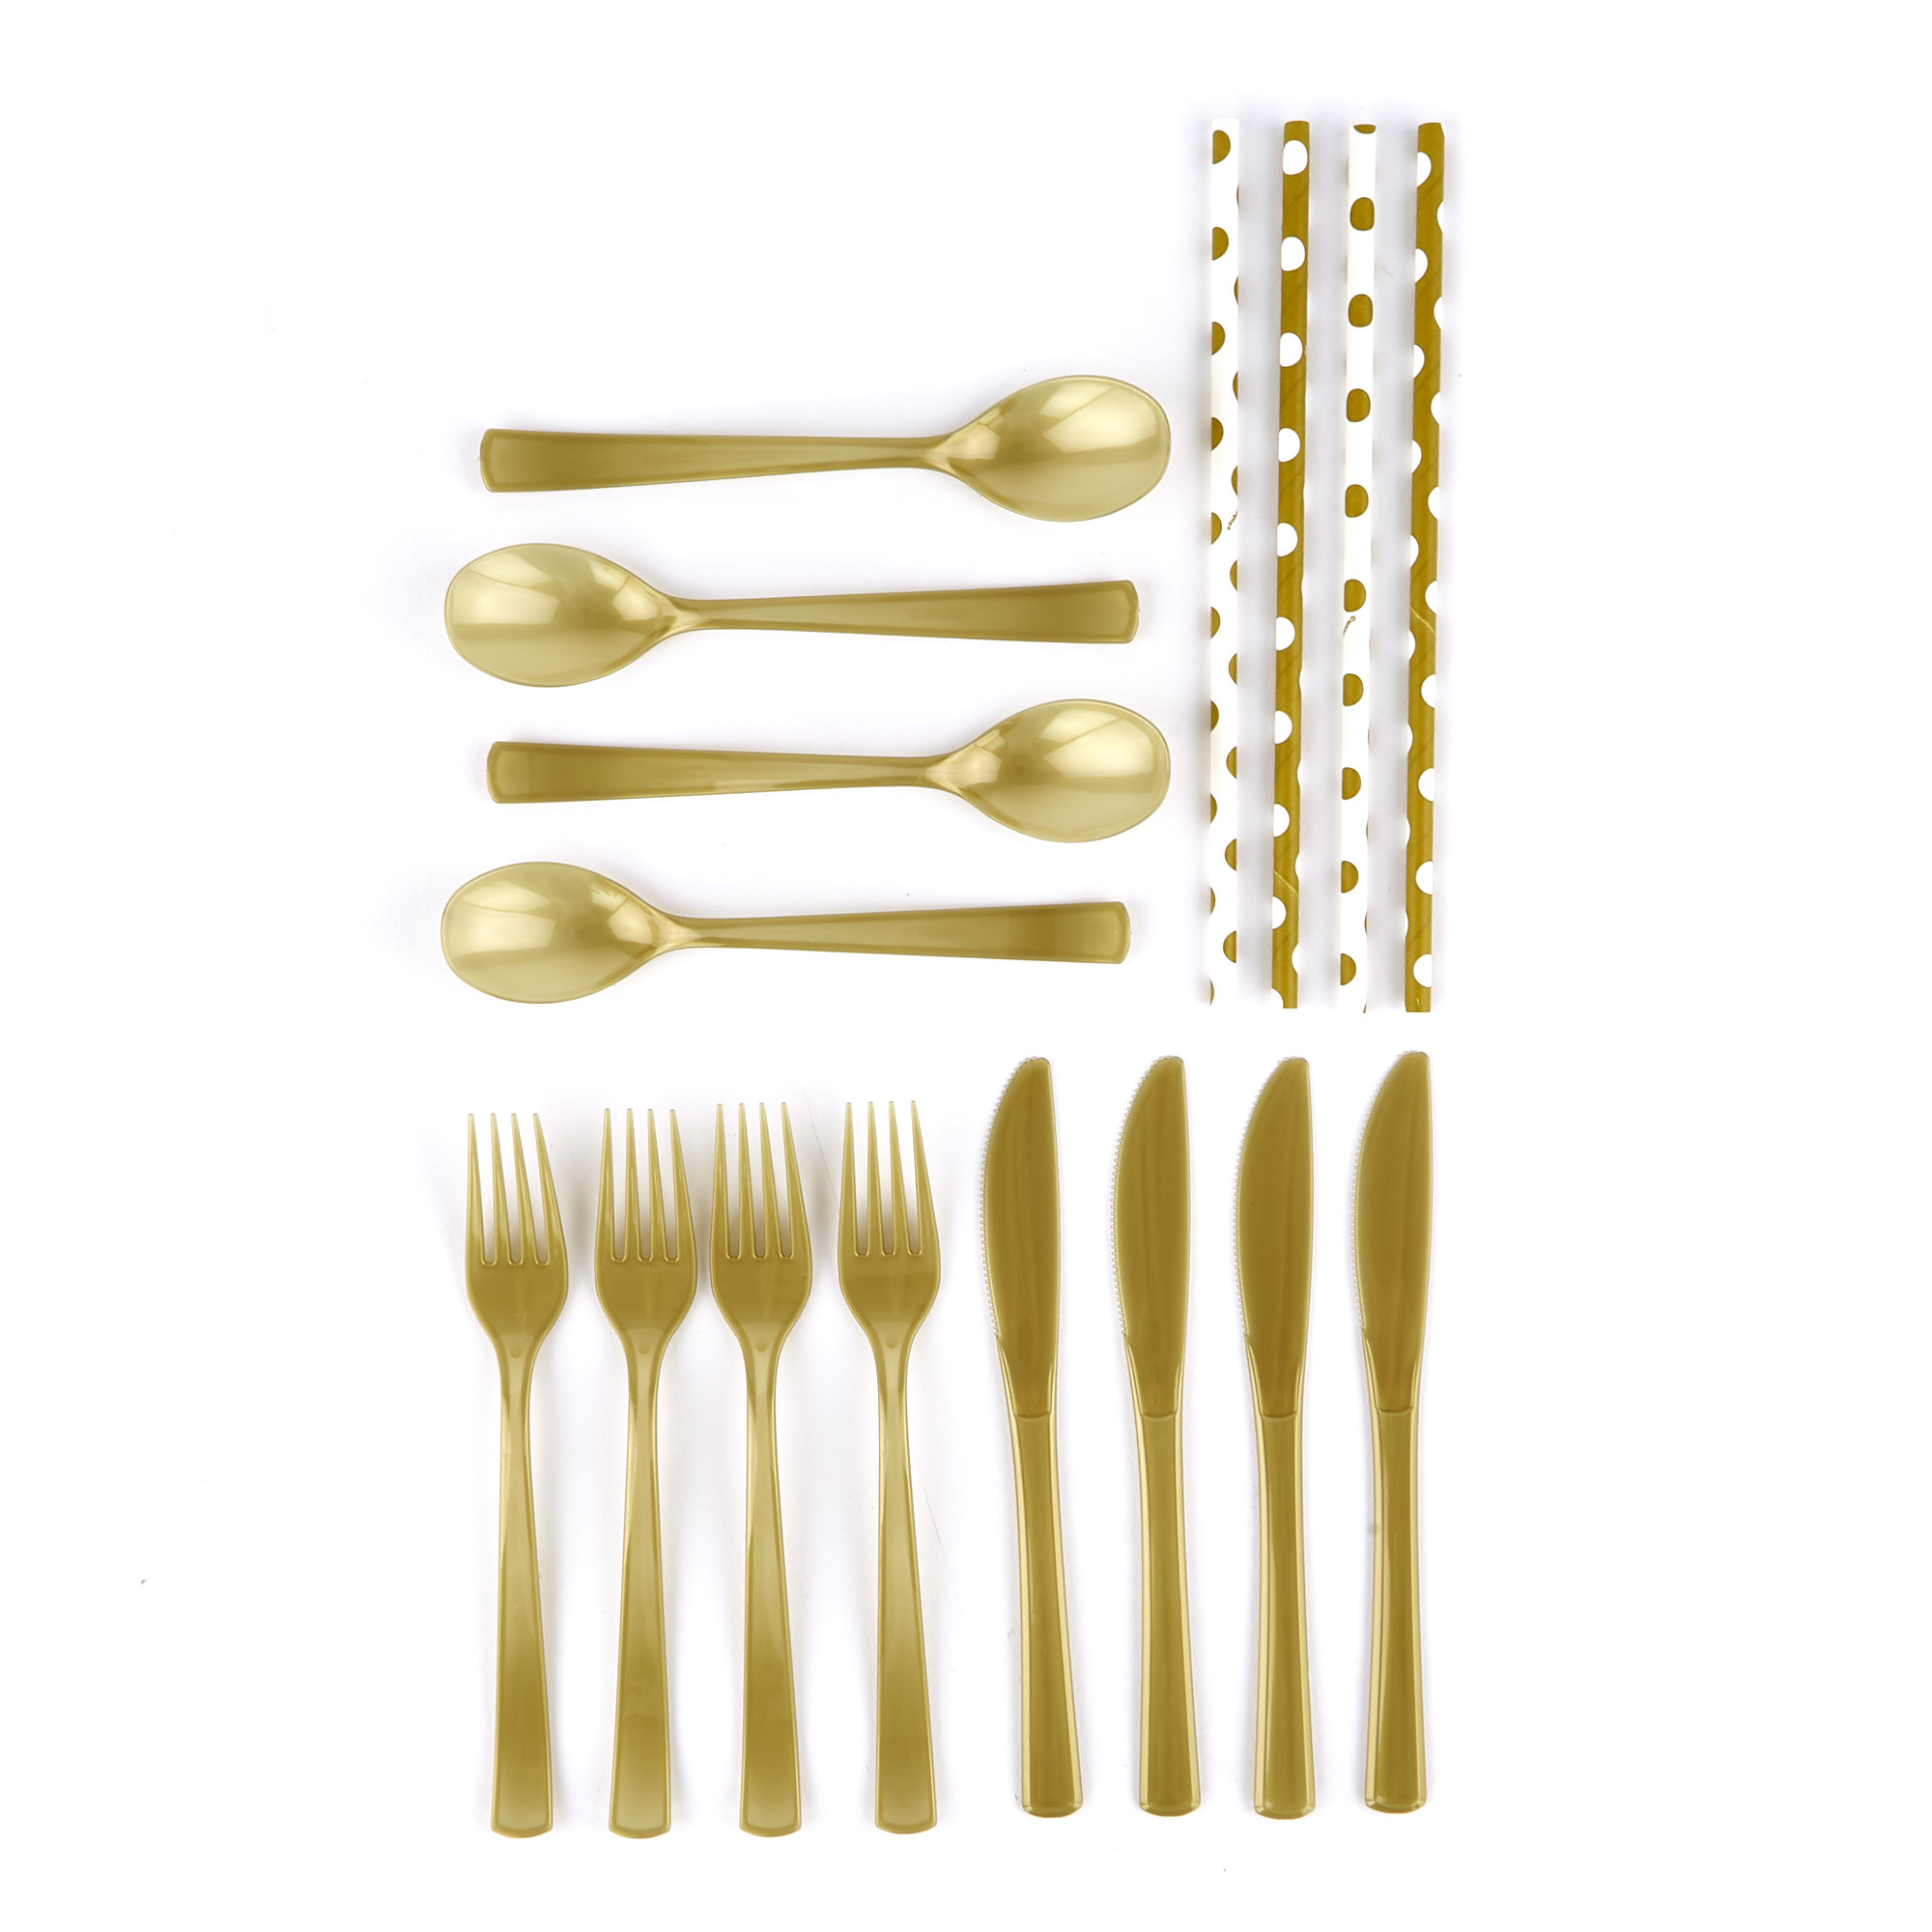 Reusable plastic cutlery sets